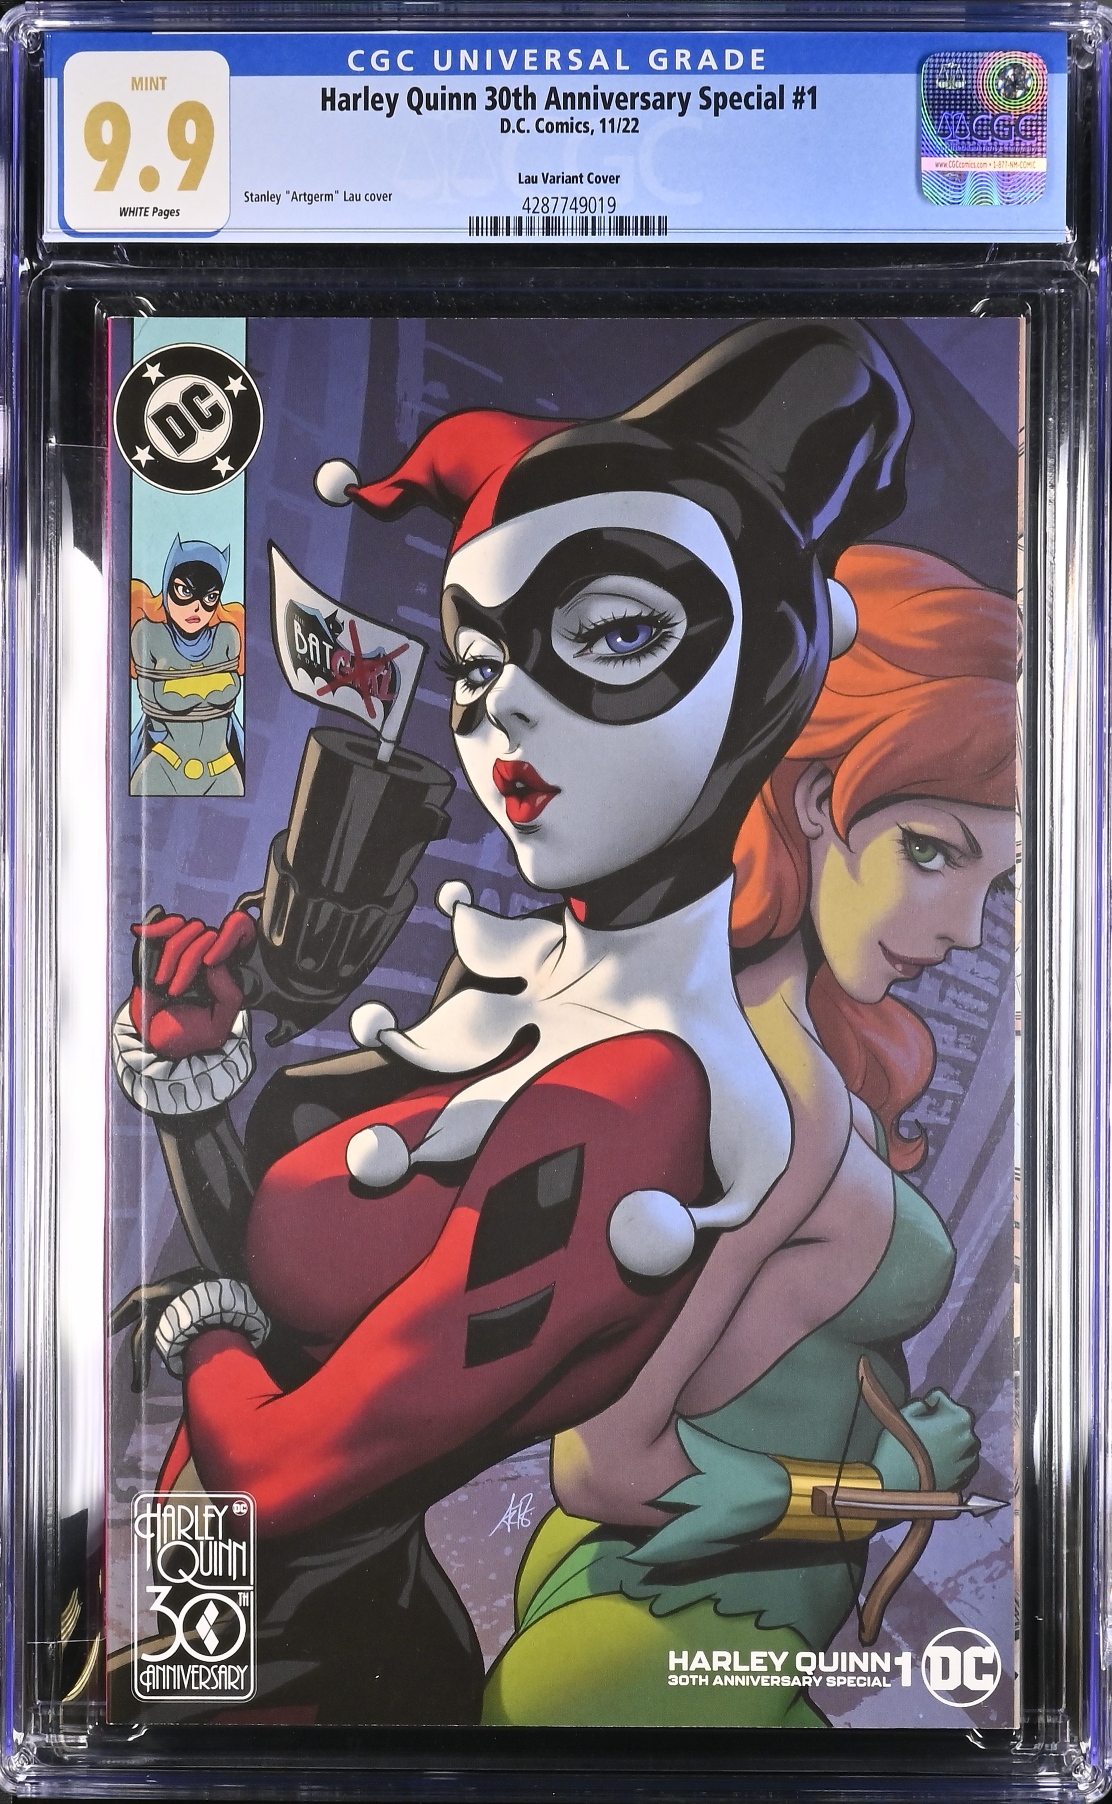 Harley Quinn 30th Anniversary Special #1 Artgerm Variant CGC 9.9